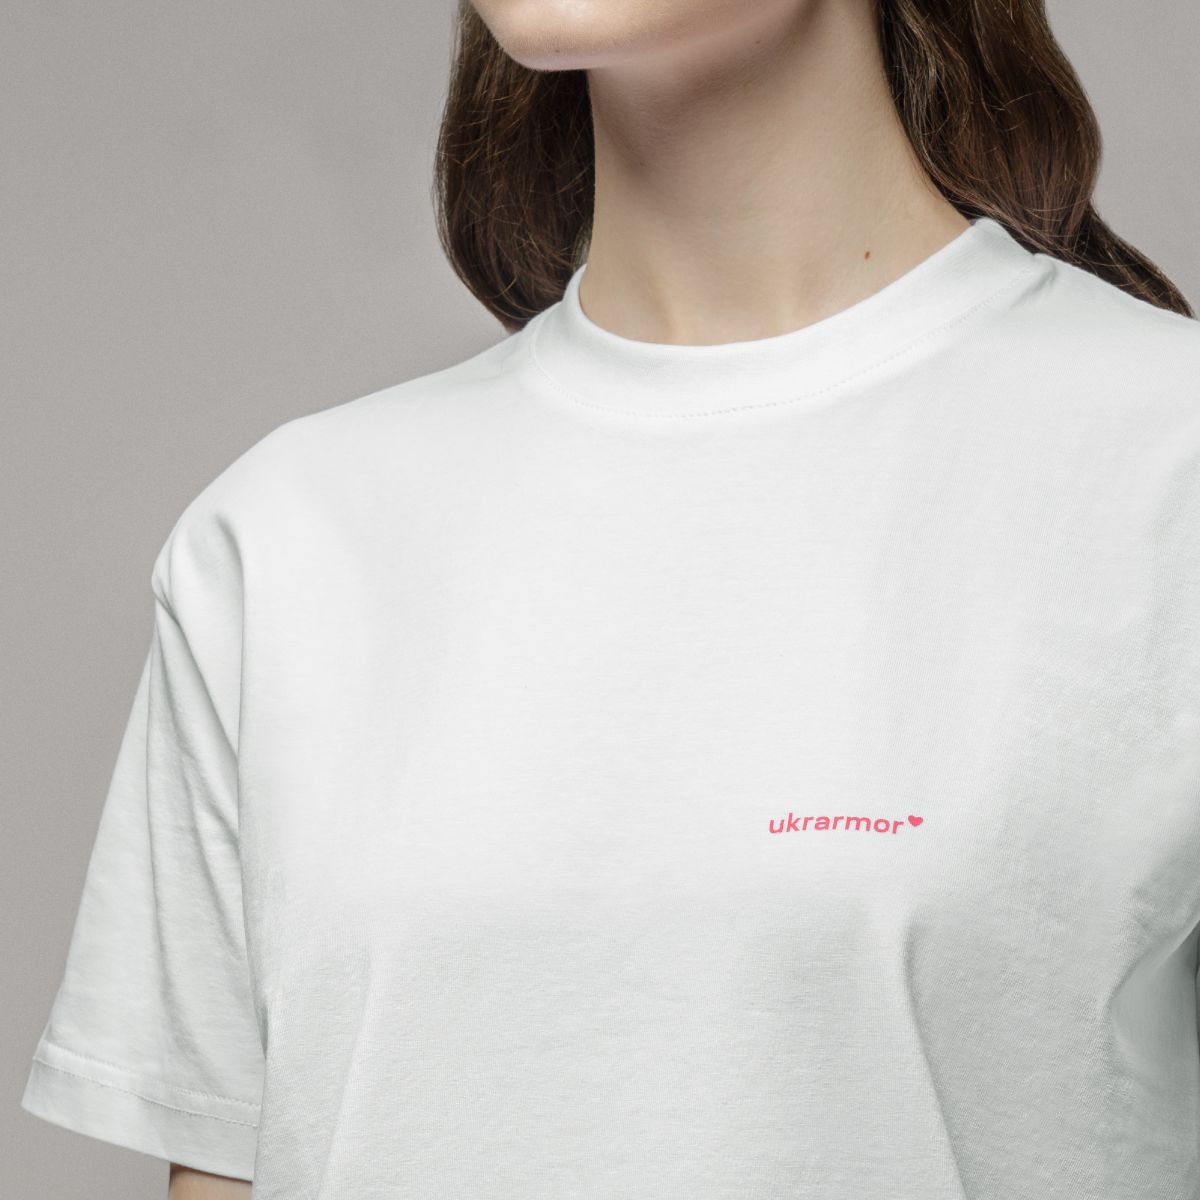 Жіноча футболка Ukrarmor Only for women. Біла. Розмір S 3